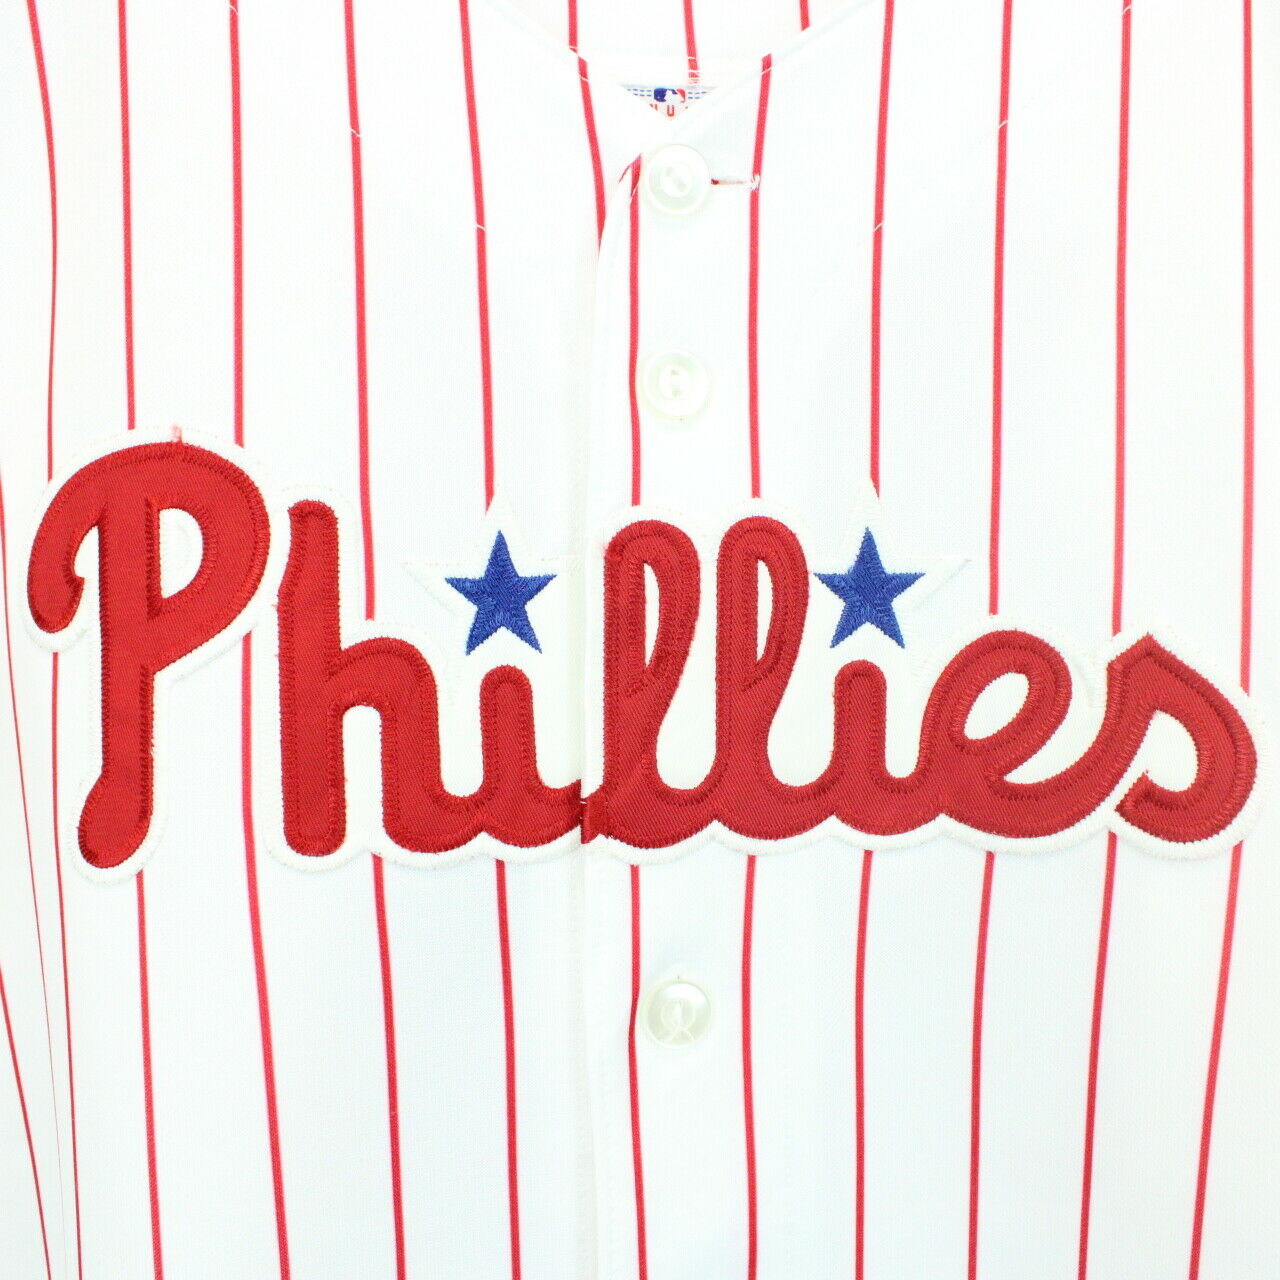 MLB 00s Philadelphia PHILLIES Jersey White | XS